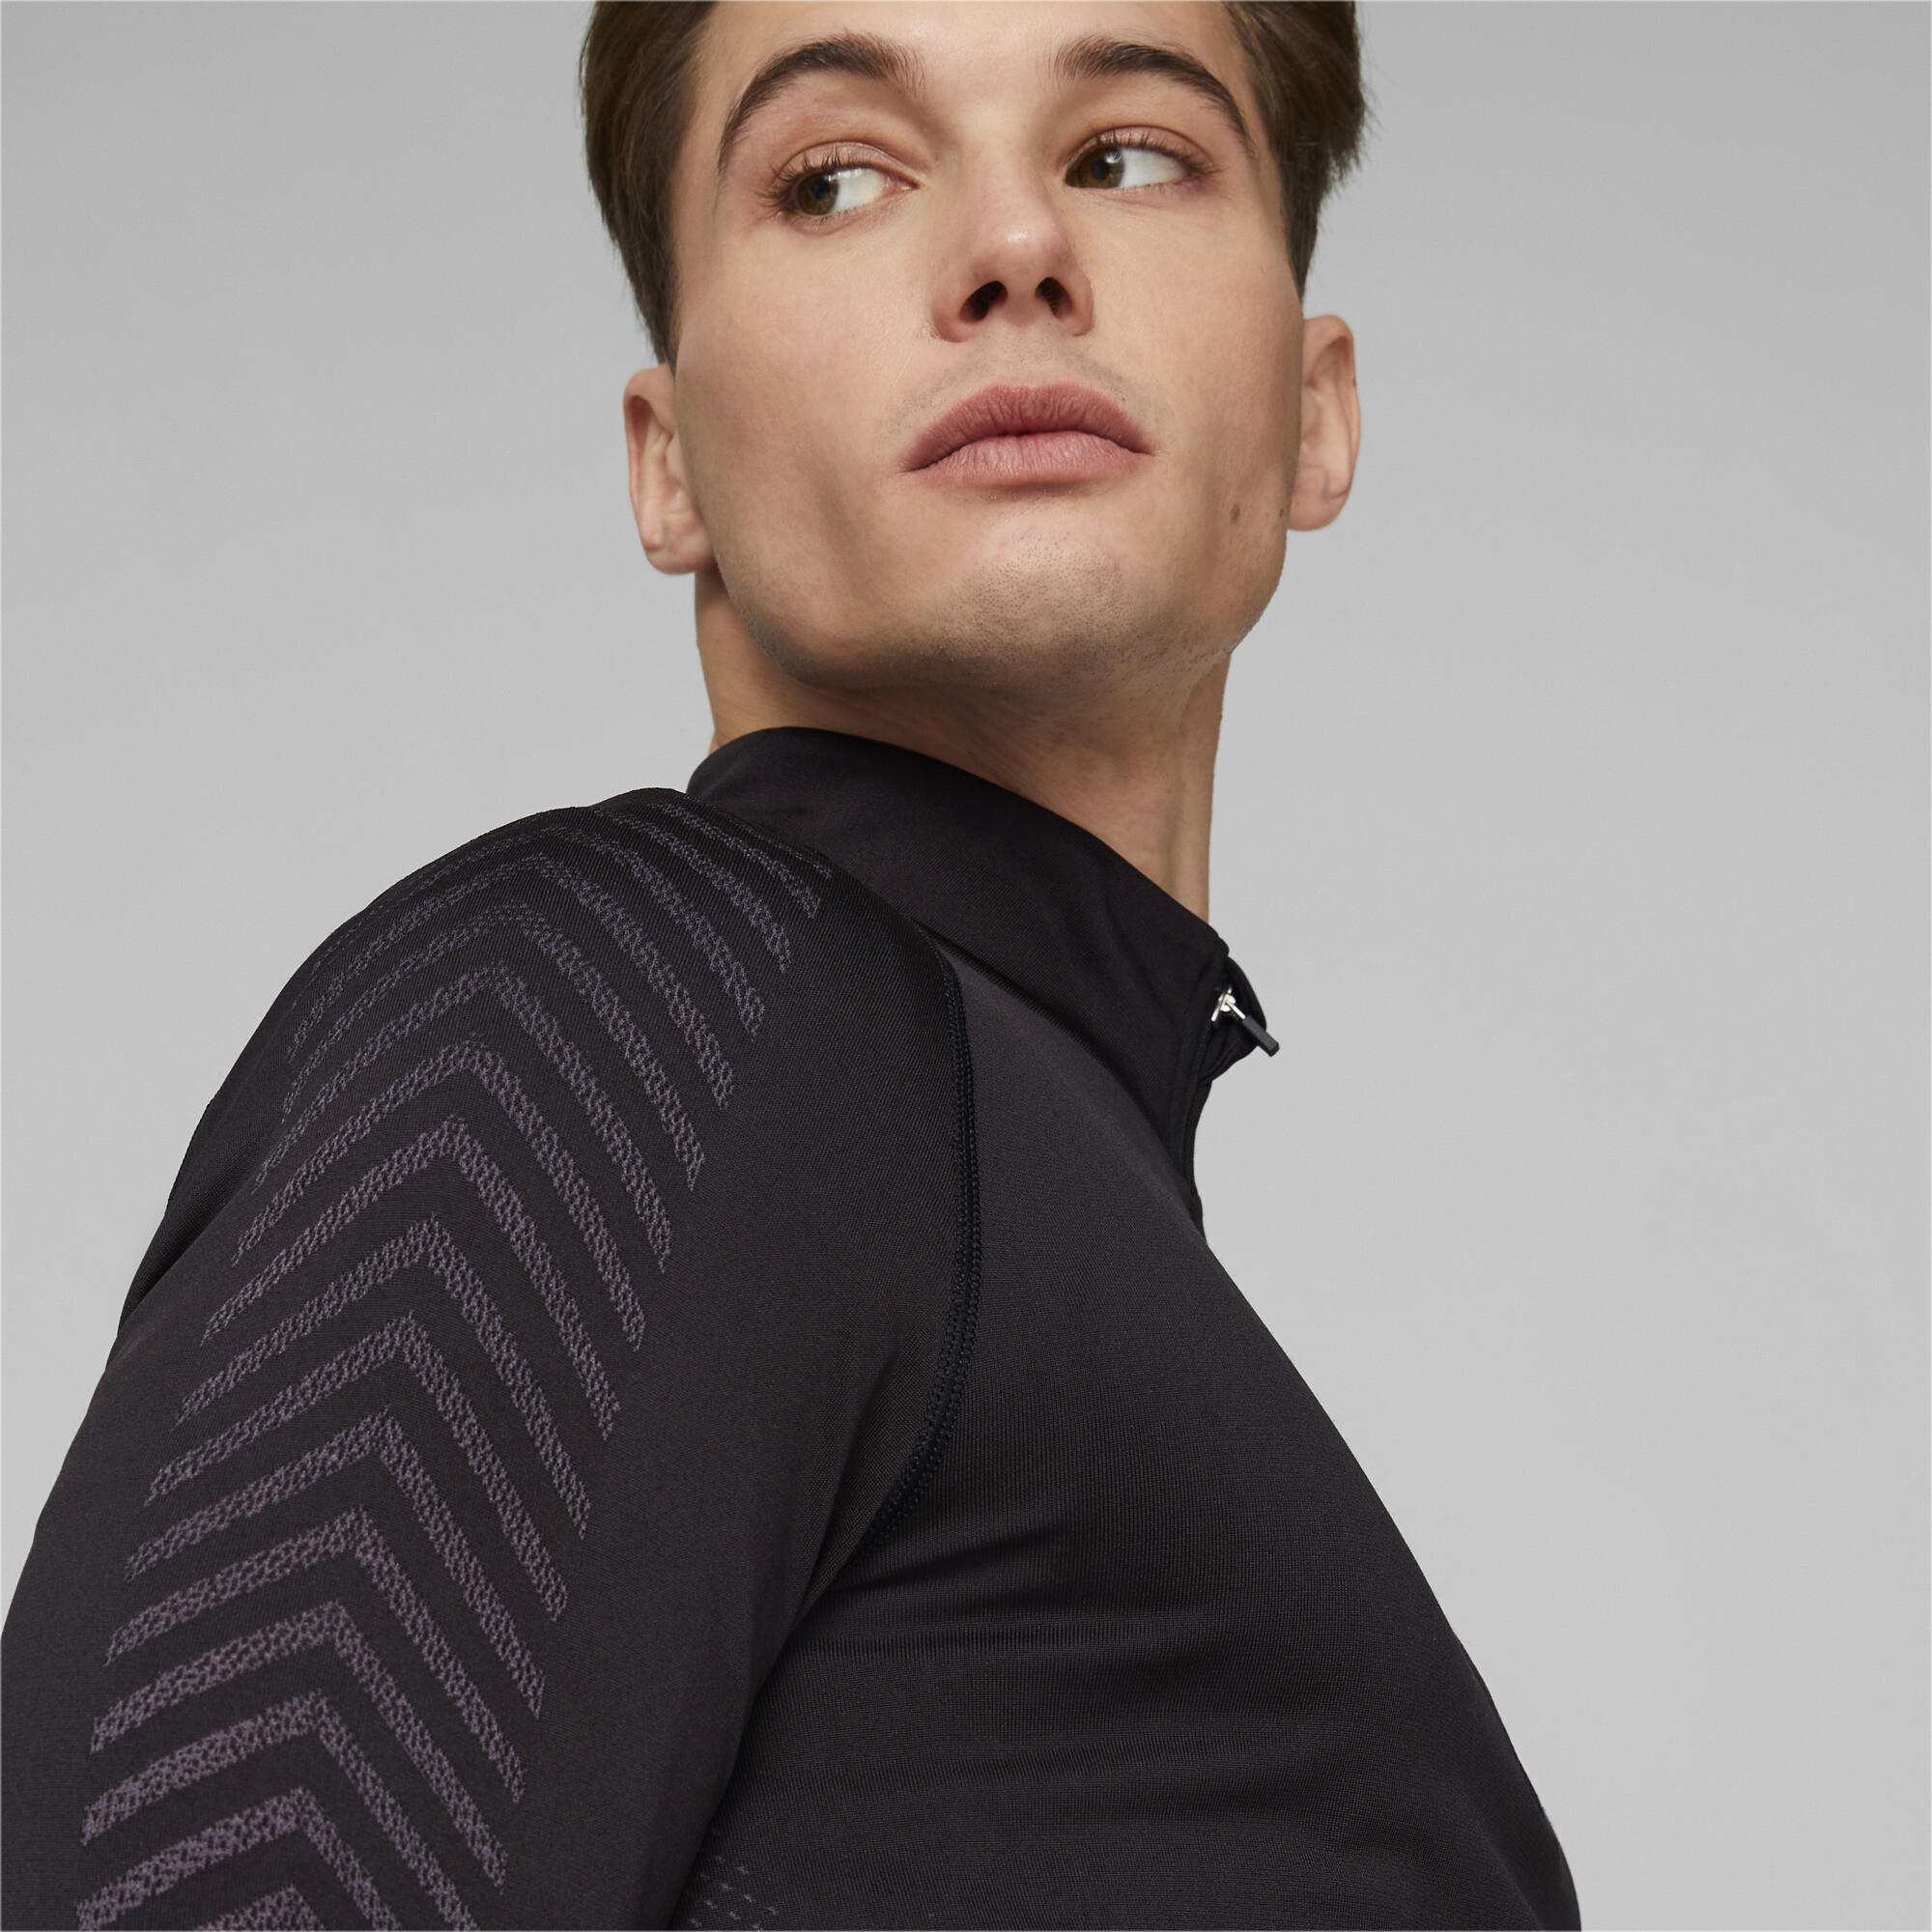 Men's Puma Train Form Knit Half-Zip Training Sweatshirt, Black, Size XL, Clothing